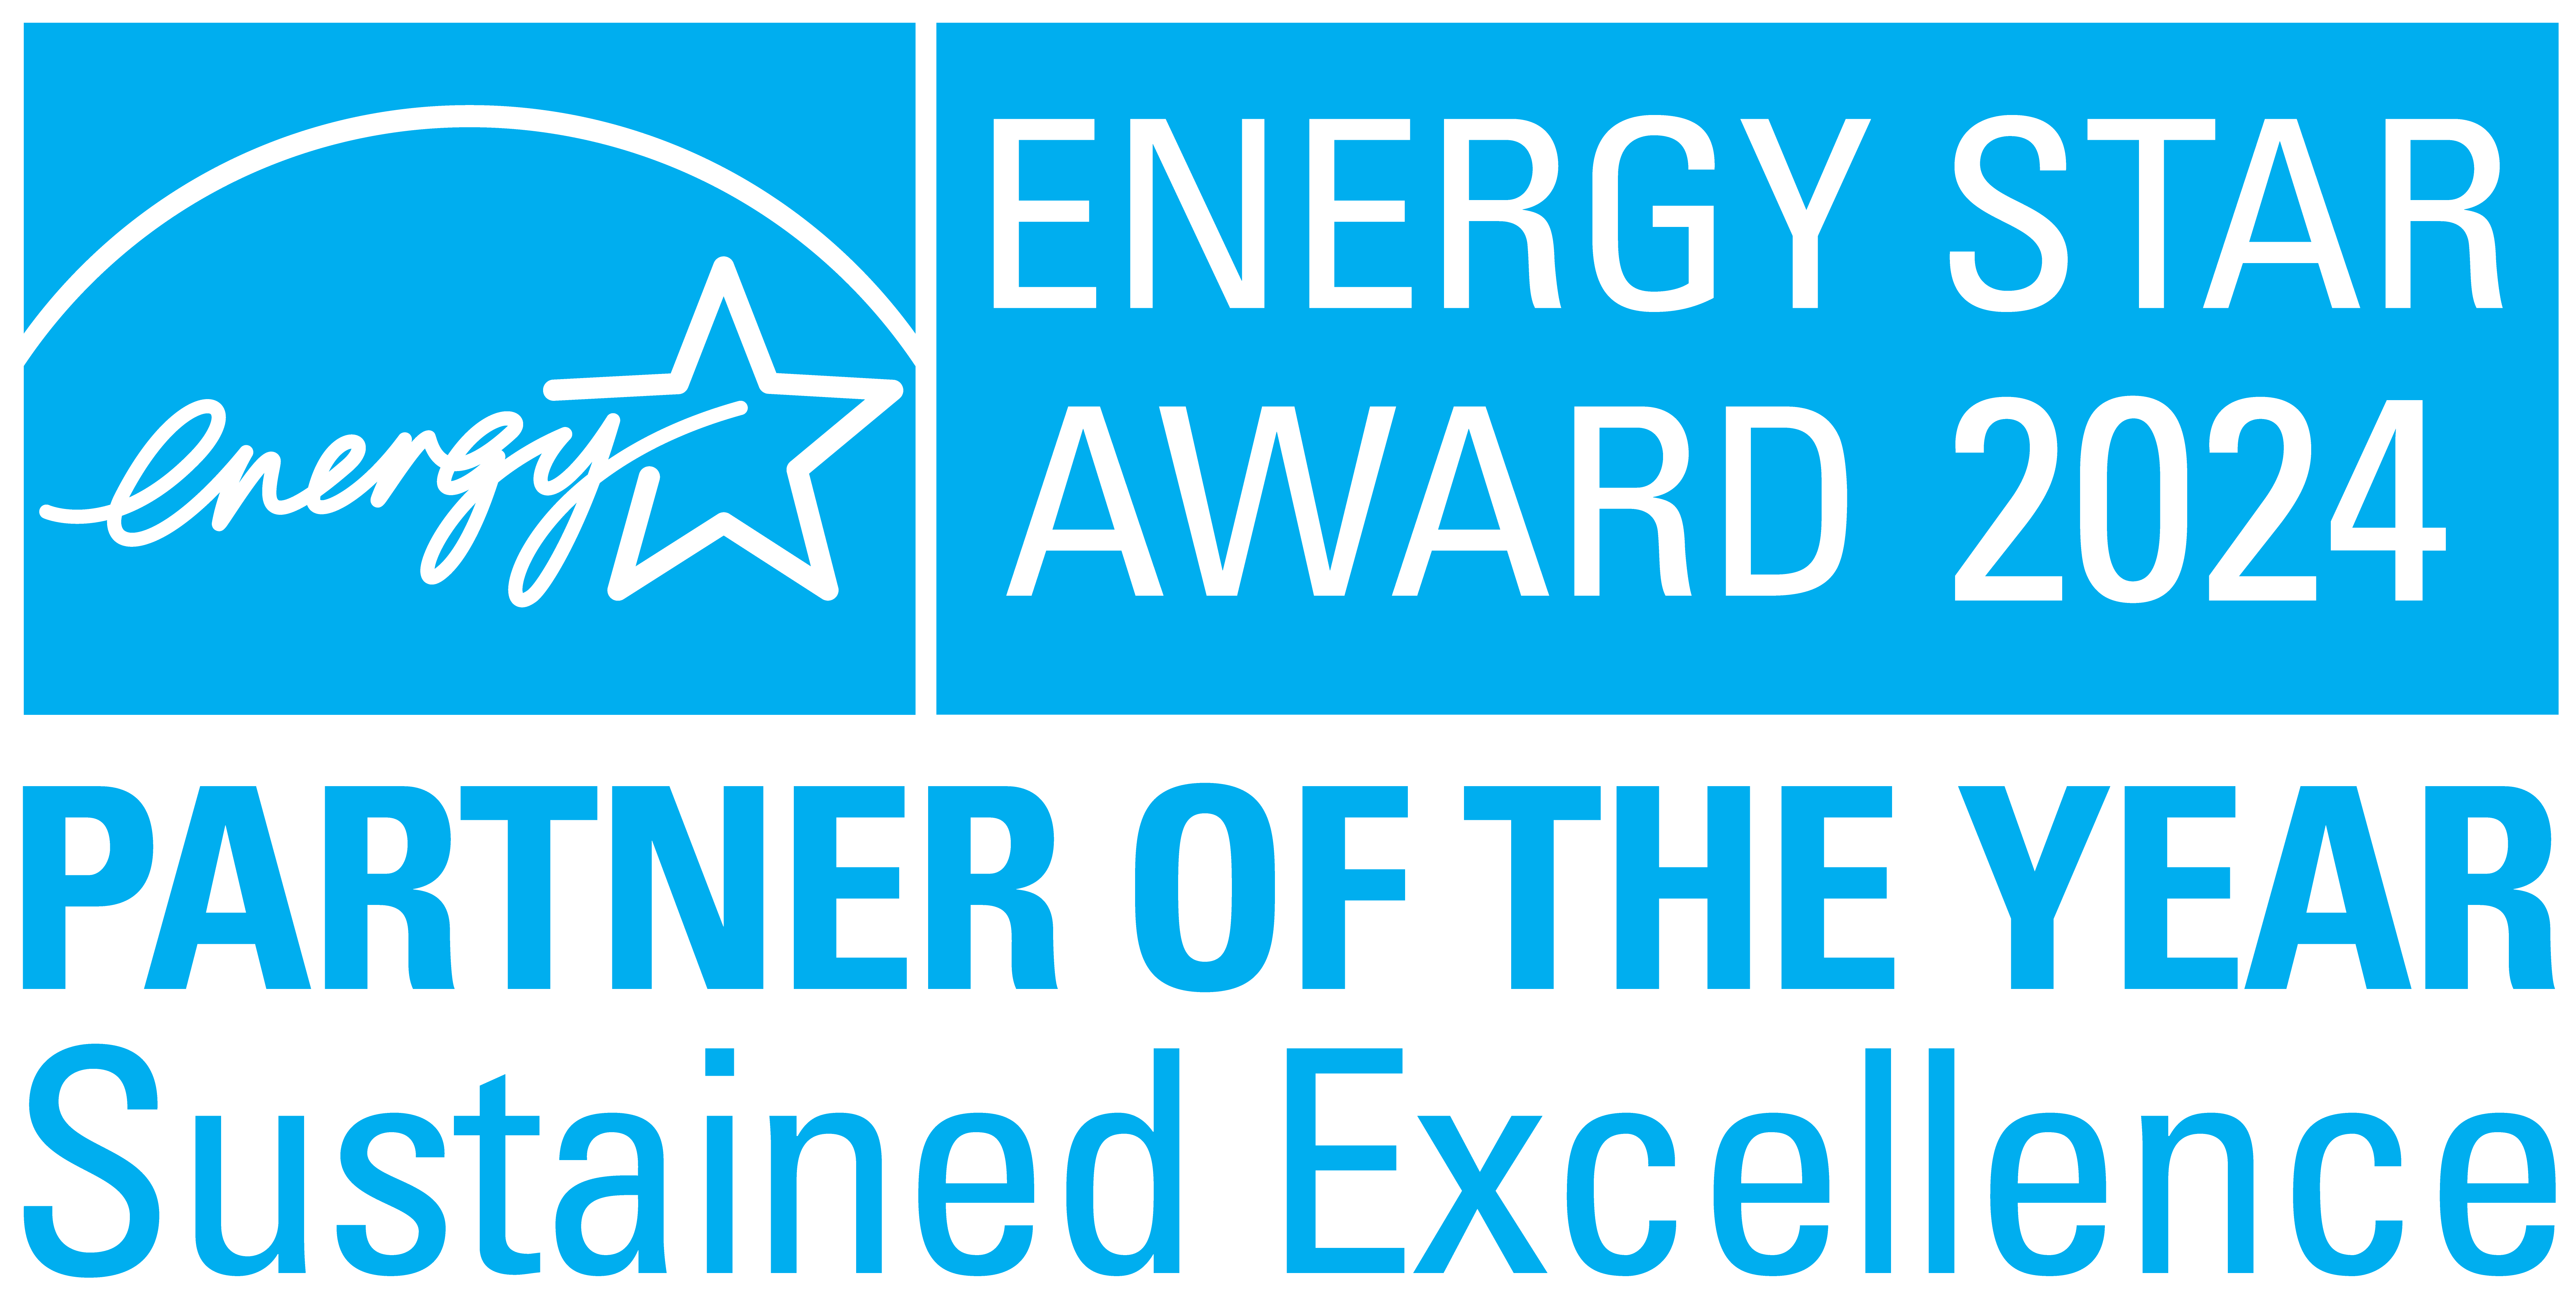 Energy Star Logo